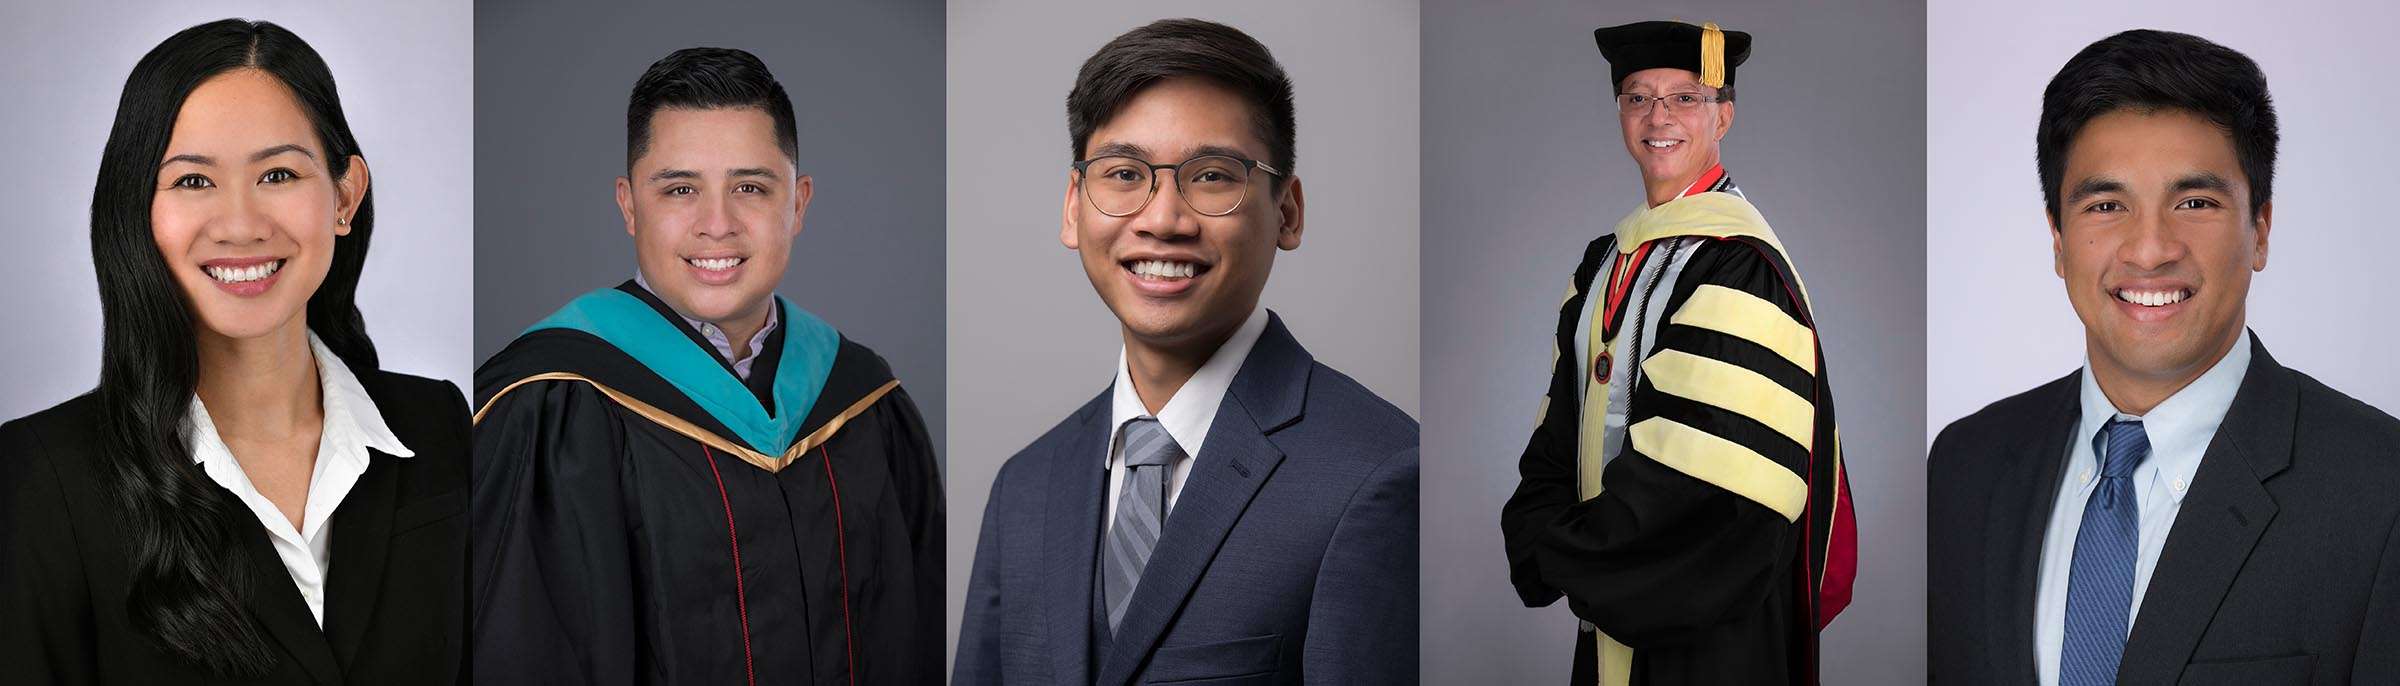 Headshots for Doctorate Graduates – Mark the Milestones Along the Way